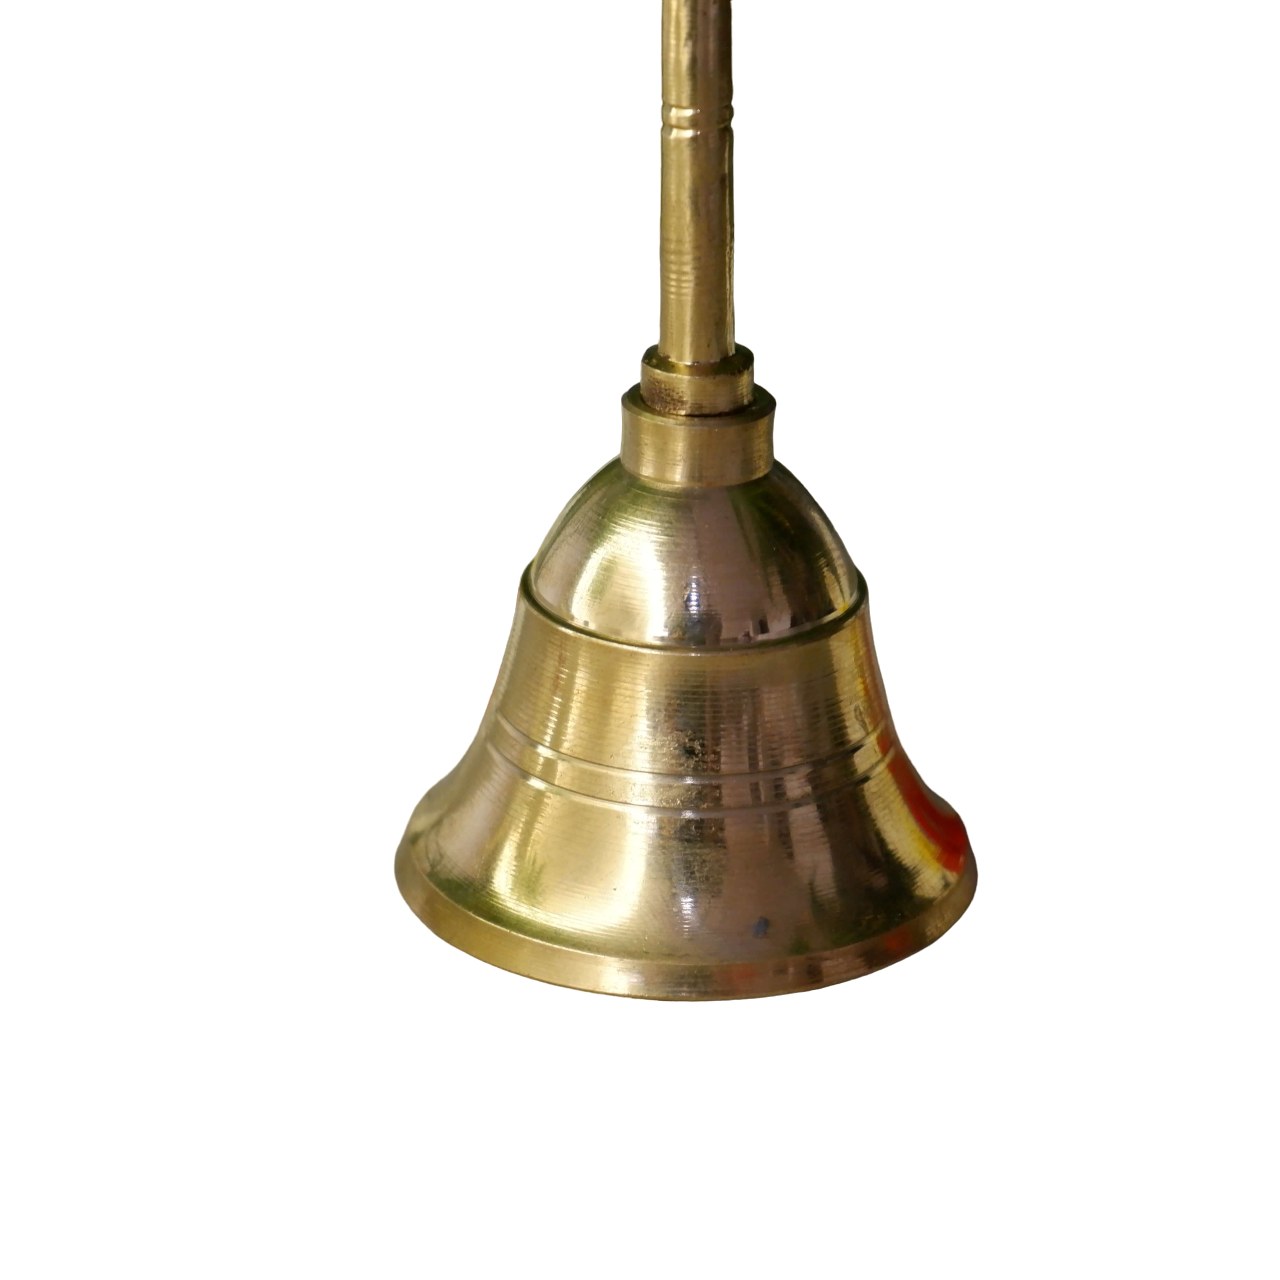 Puja Bell (Ghanti)